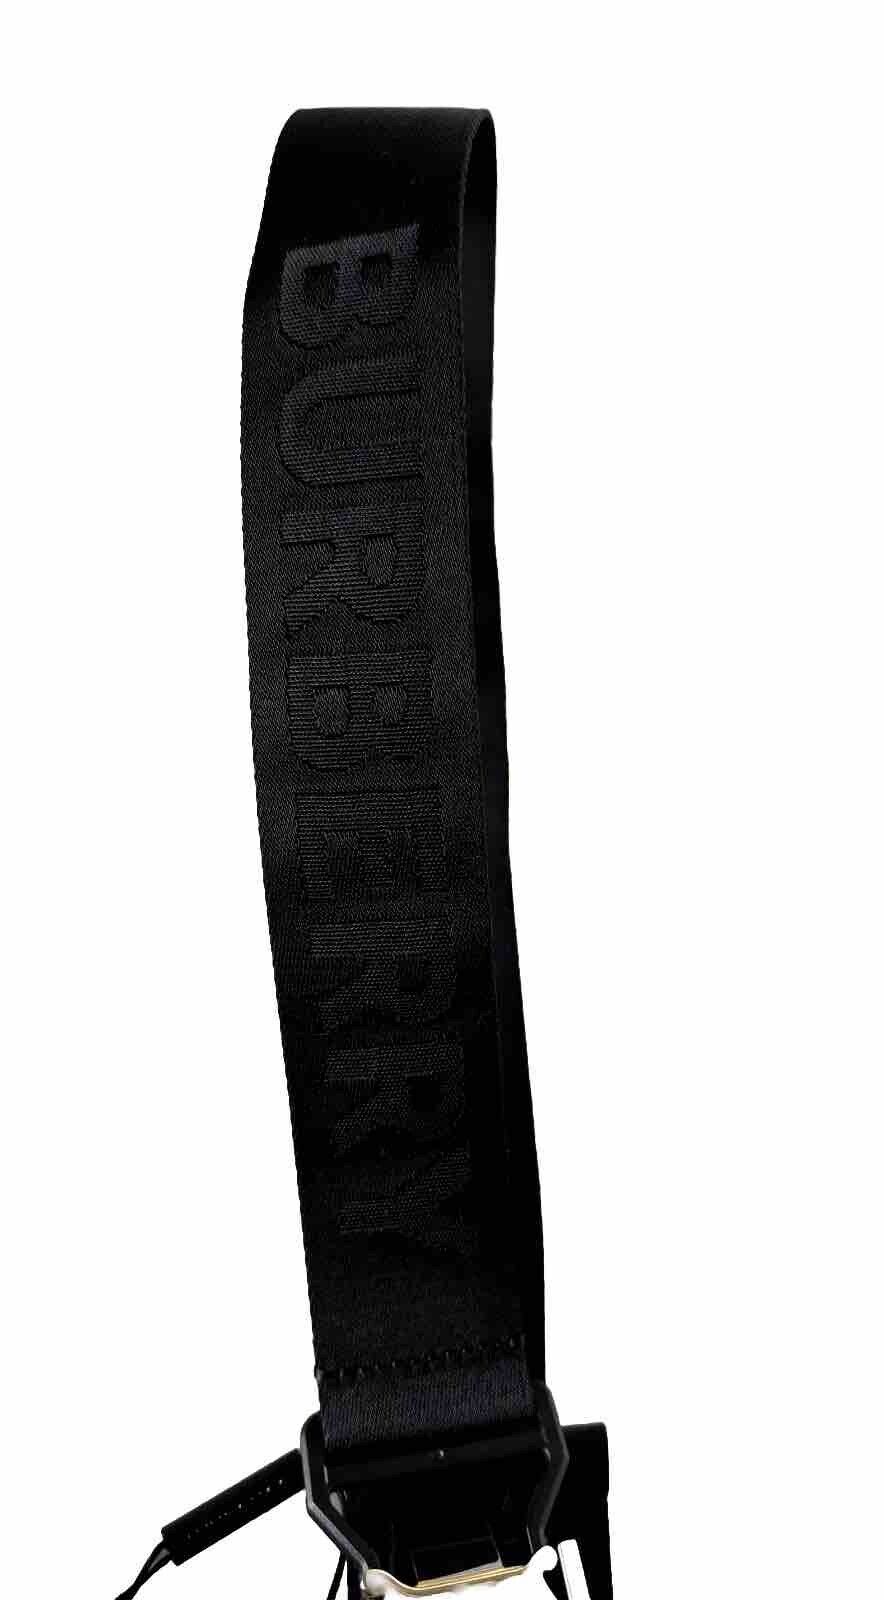 New $440 Burberry Sport Clip TB Buckle Nylon Black Belt 44/110 Italy 8051510